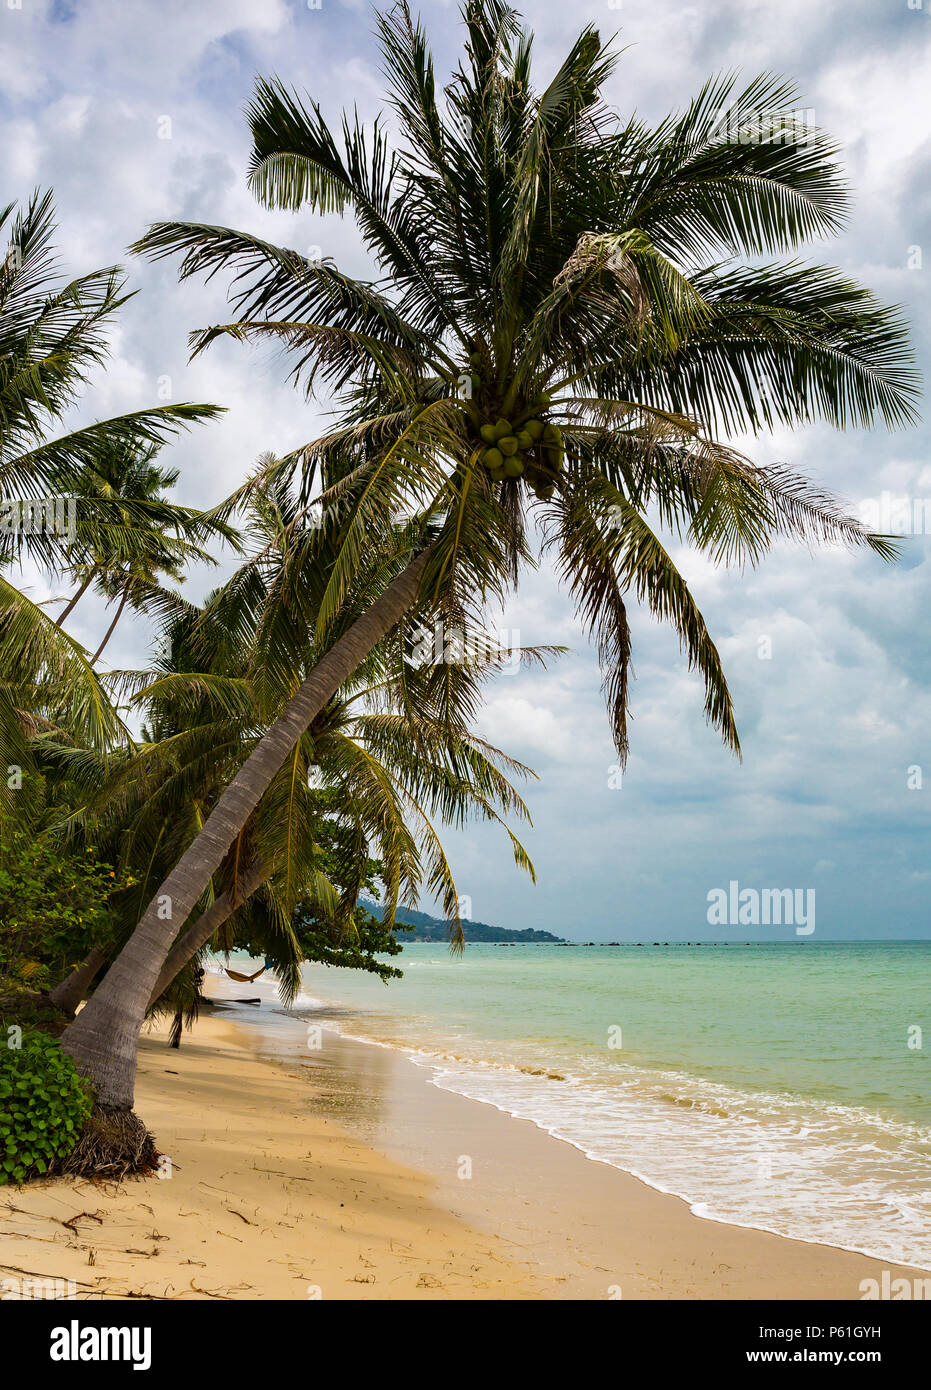 The coast of Koh Samui Stock Photo - Alamy